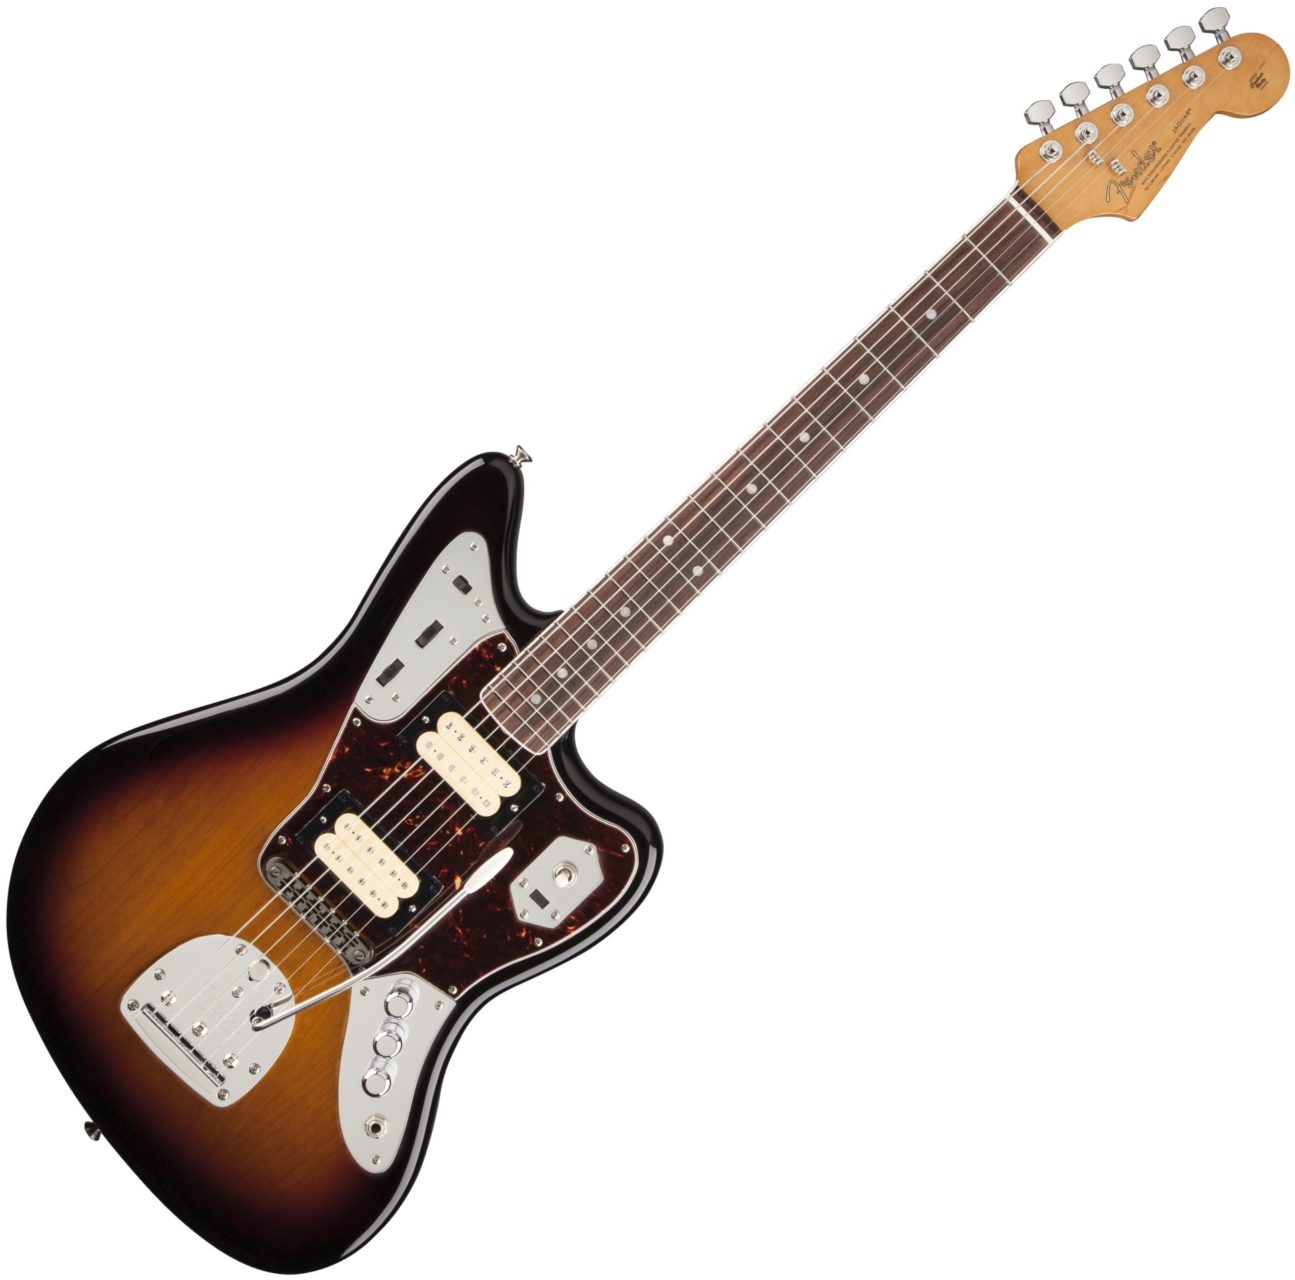 Fender Jaguar Kurt Cobain Limited Edition